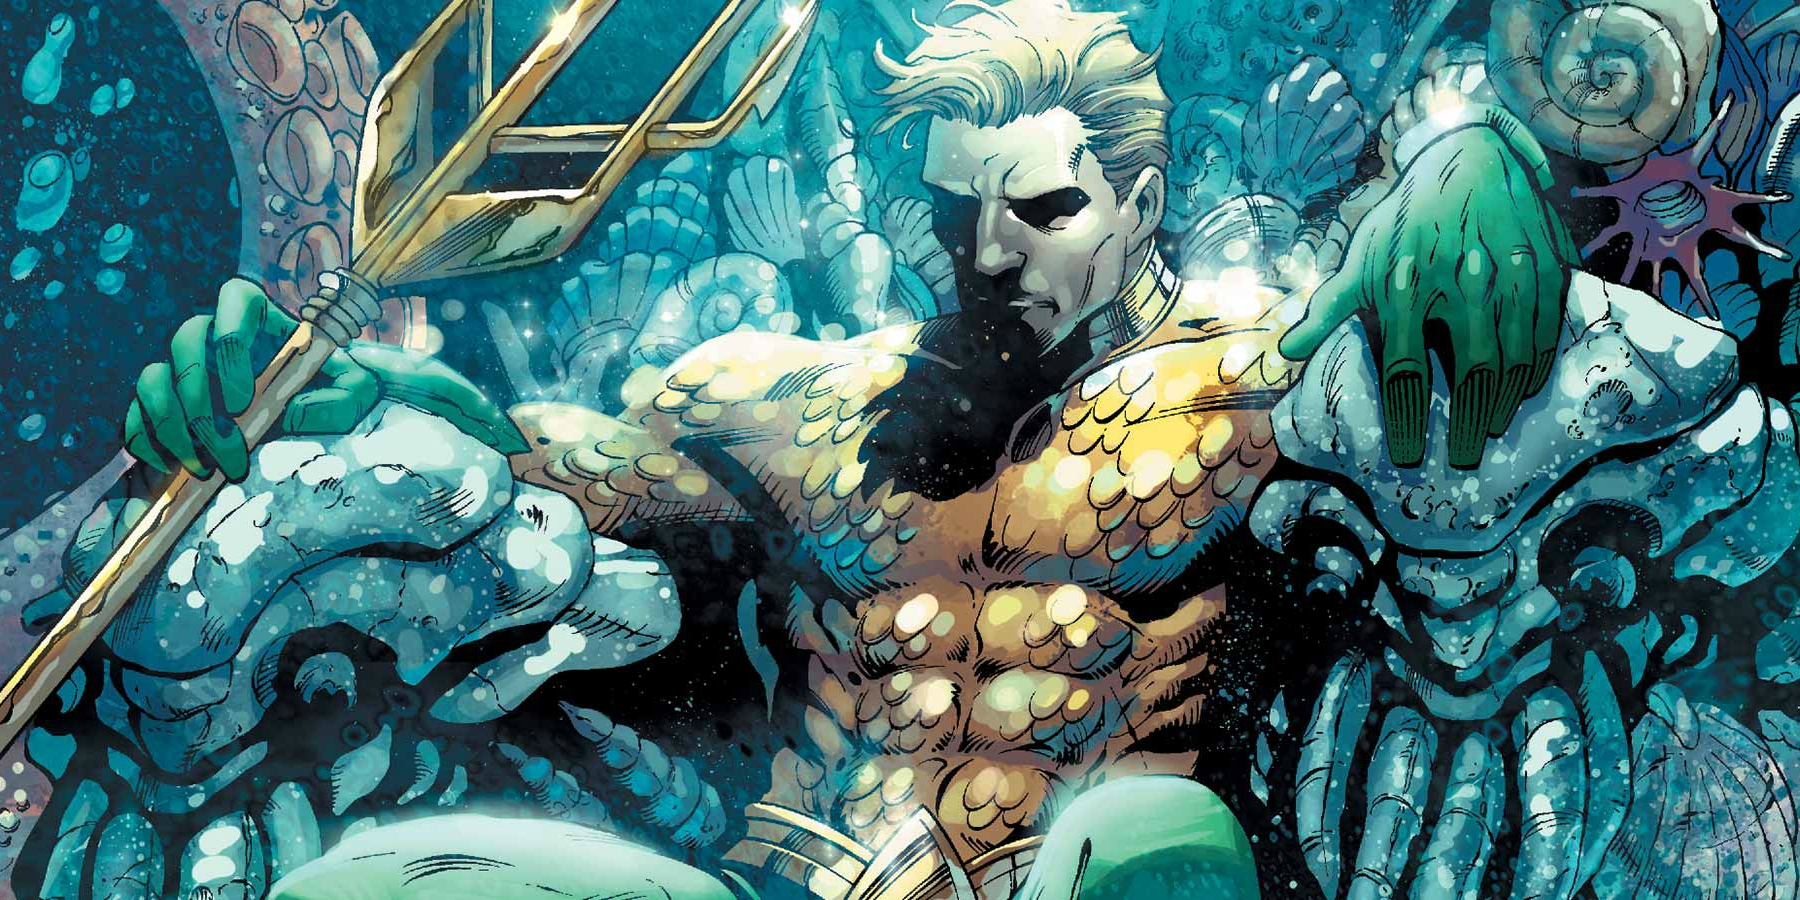 Aquaman King of Atlantis